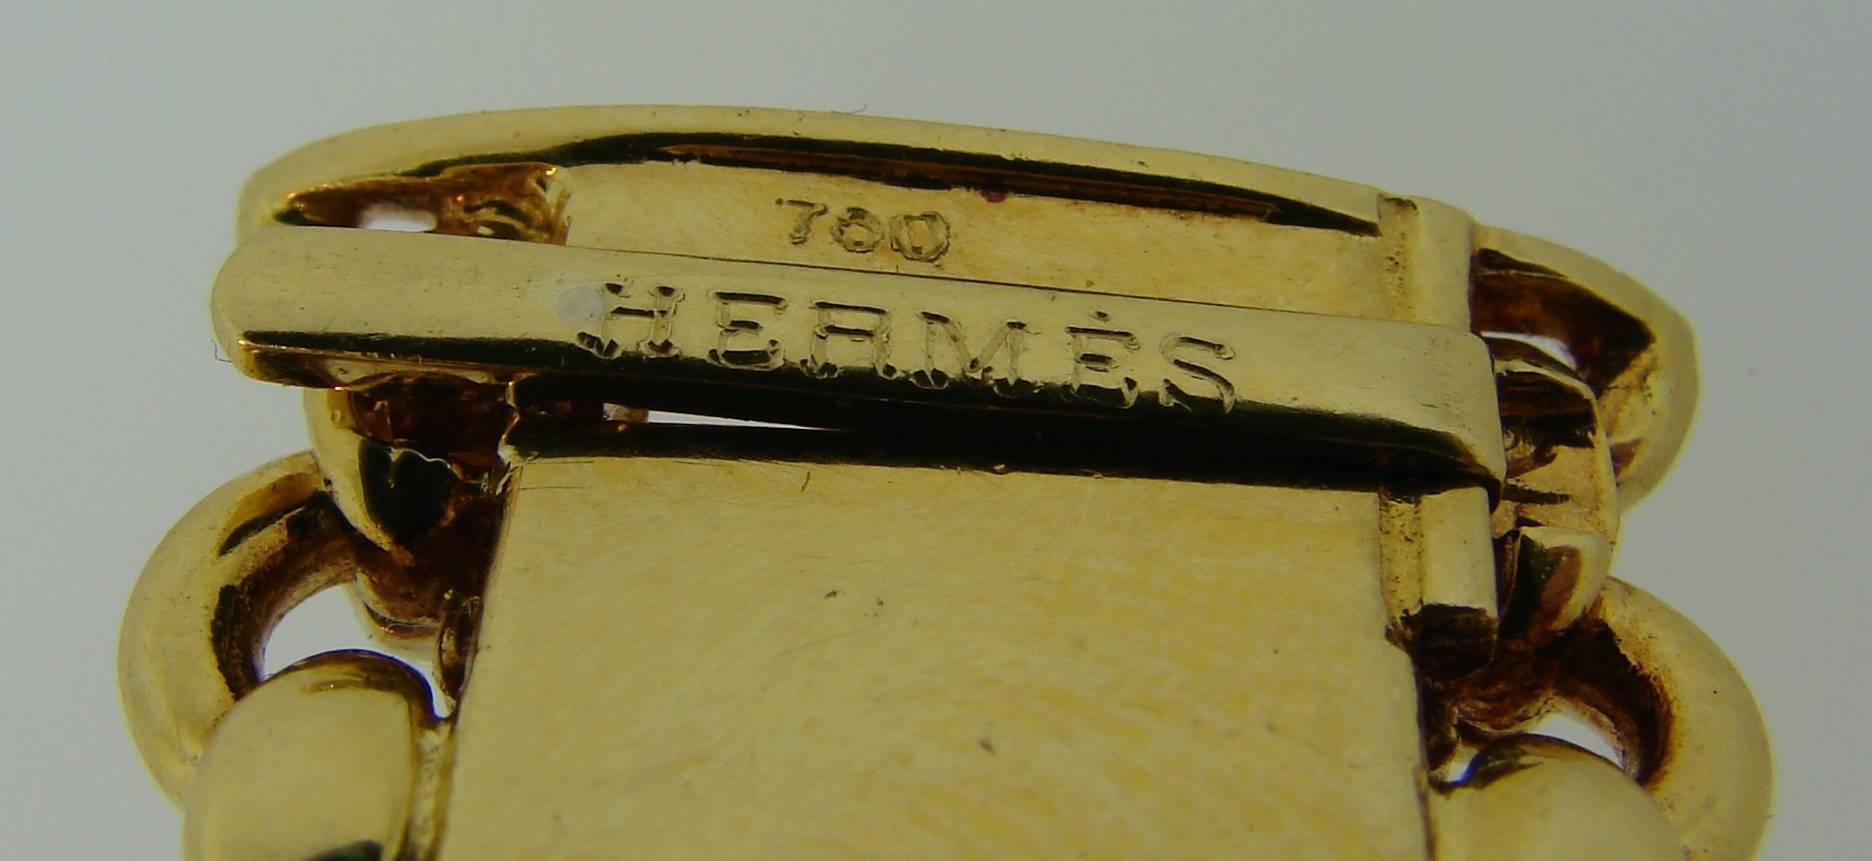 1980s Hermes Carnelian Yellow Gold Earrings and Bracelet Set 5